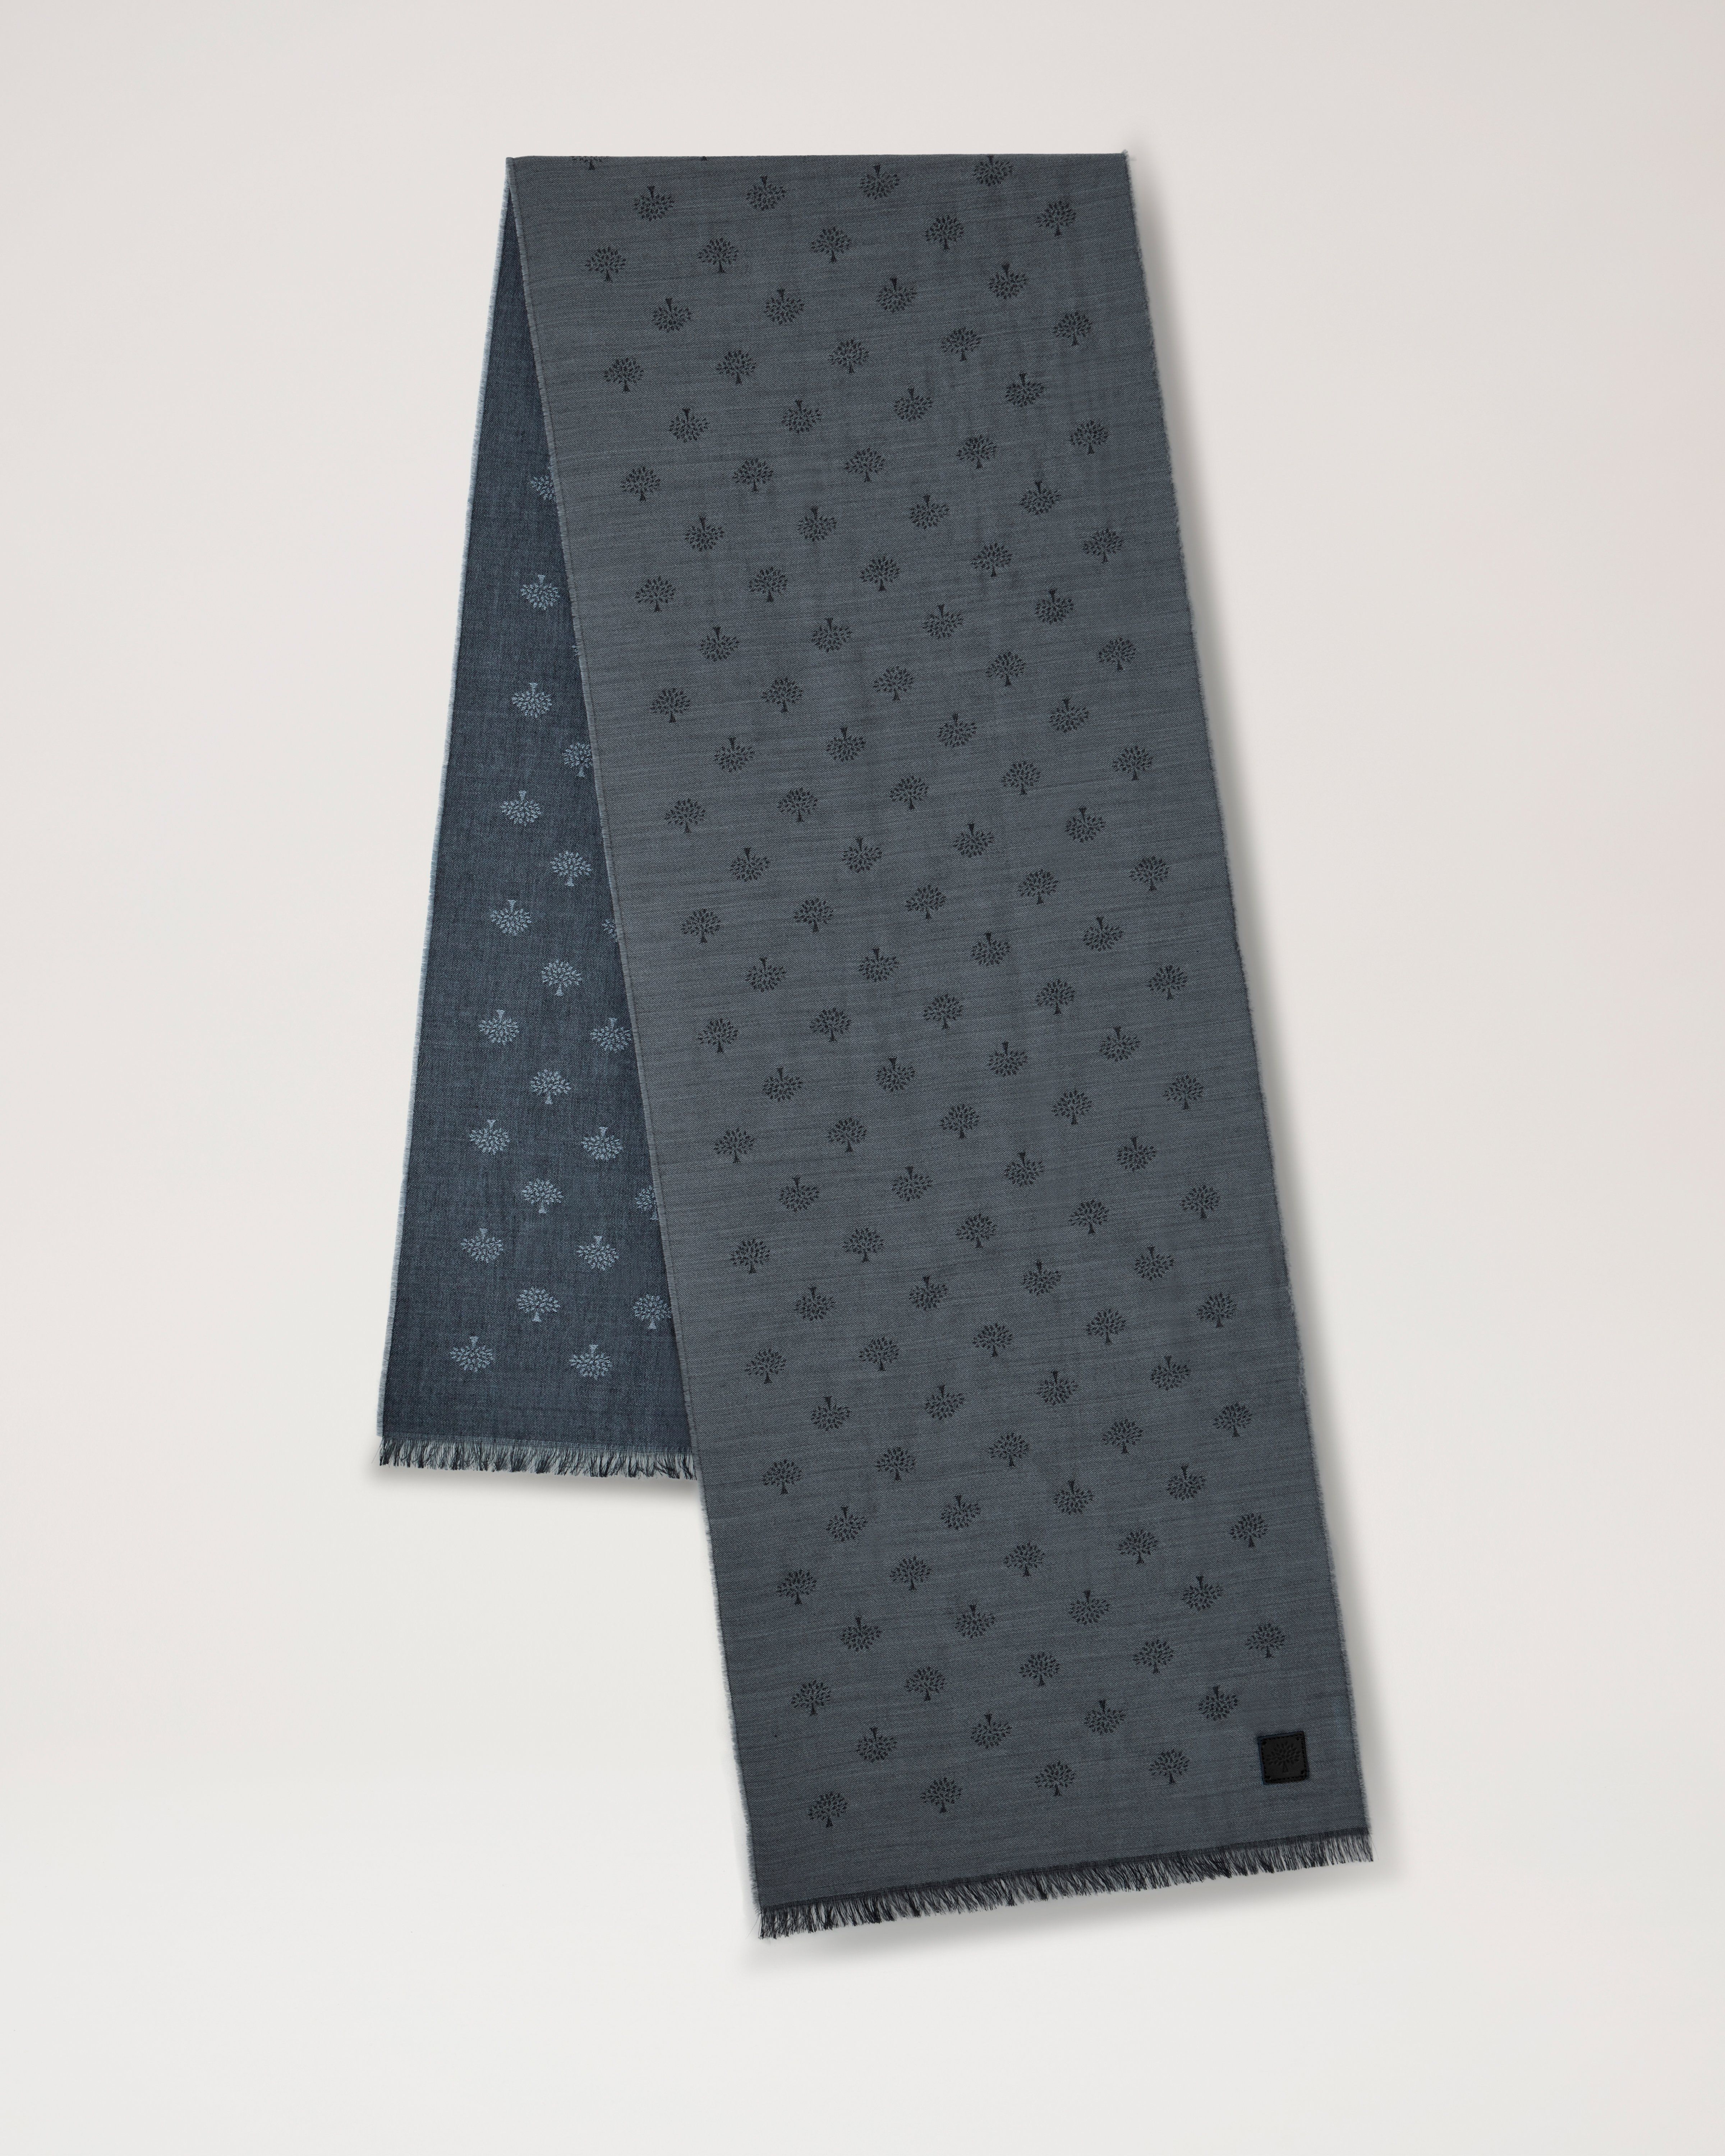 Shop Louis Vuitton MONOGRAM Monogram Wool Cashmere Blended Fabrics